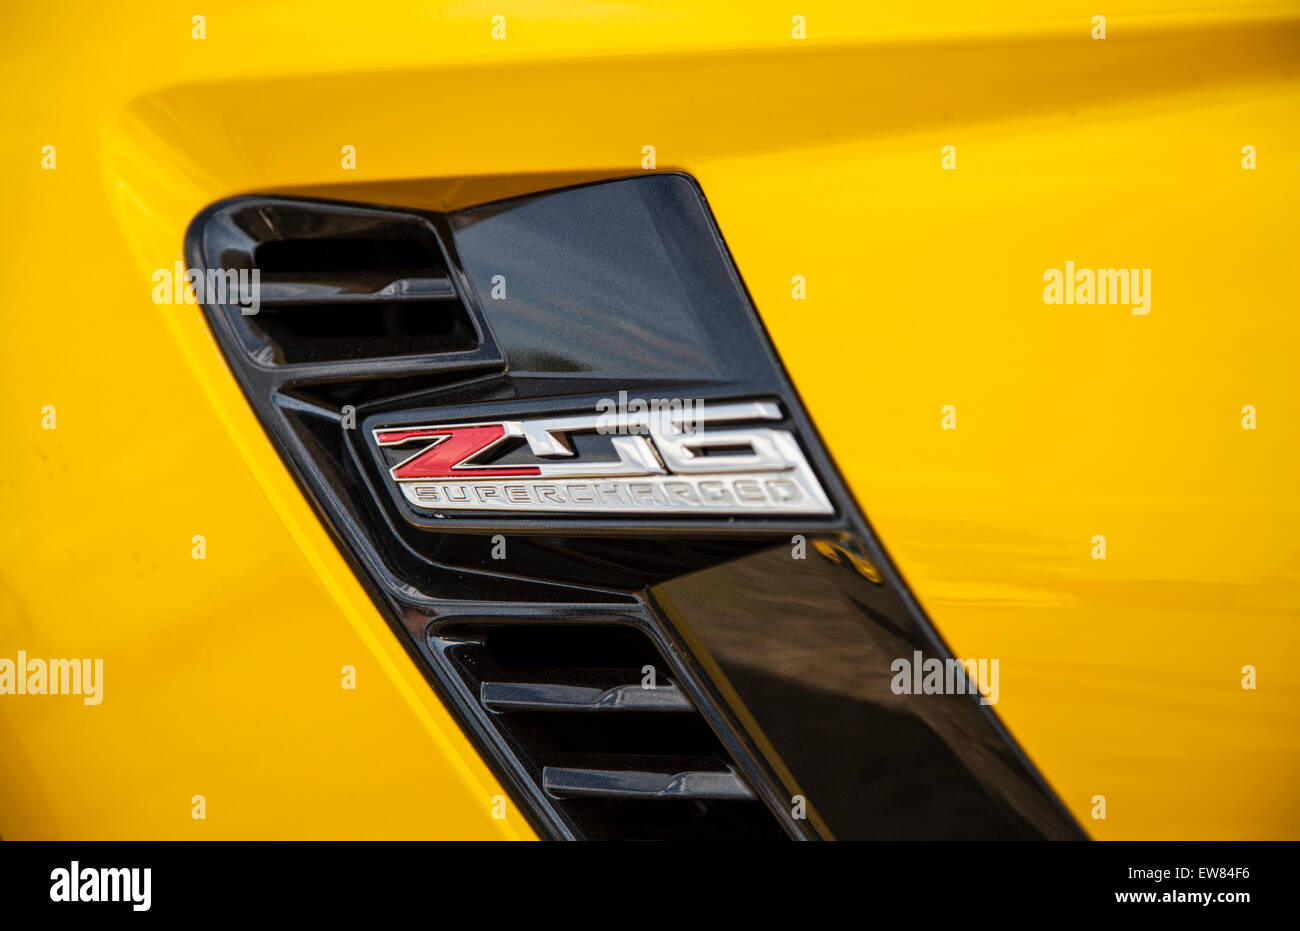 Z06 Yellow Corvette at 12 Hours of Sebring Car race in Sebring Florida Stock Photo